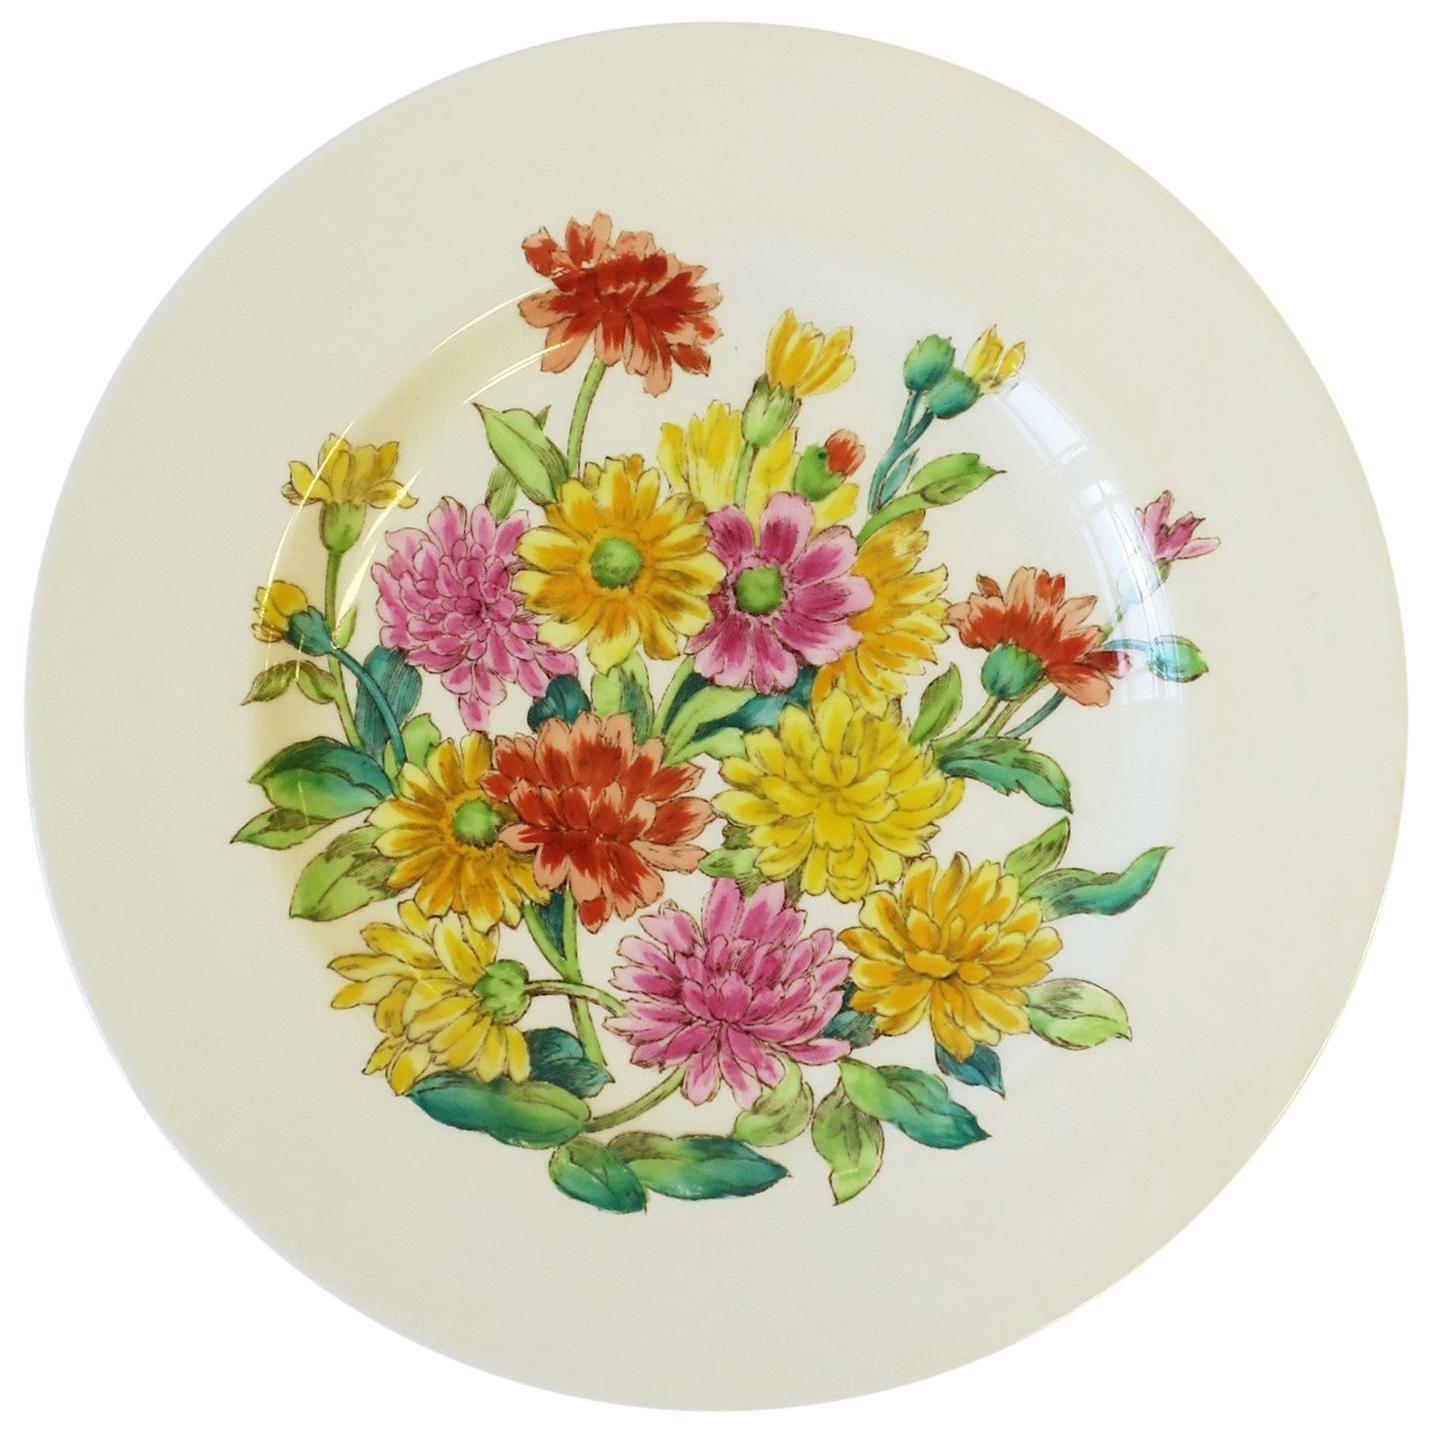 English Zinnia Flower Plate